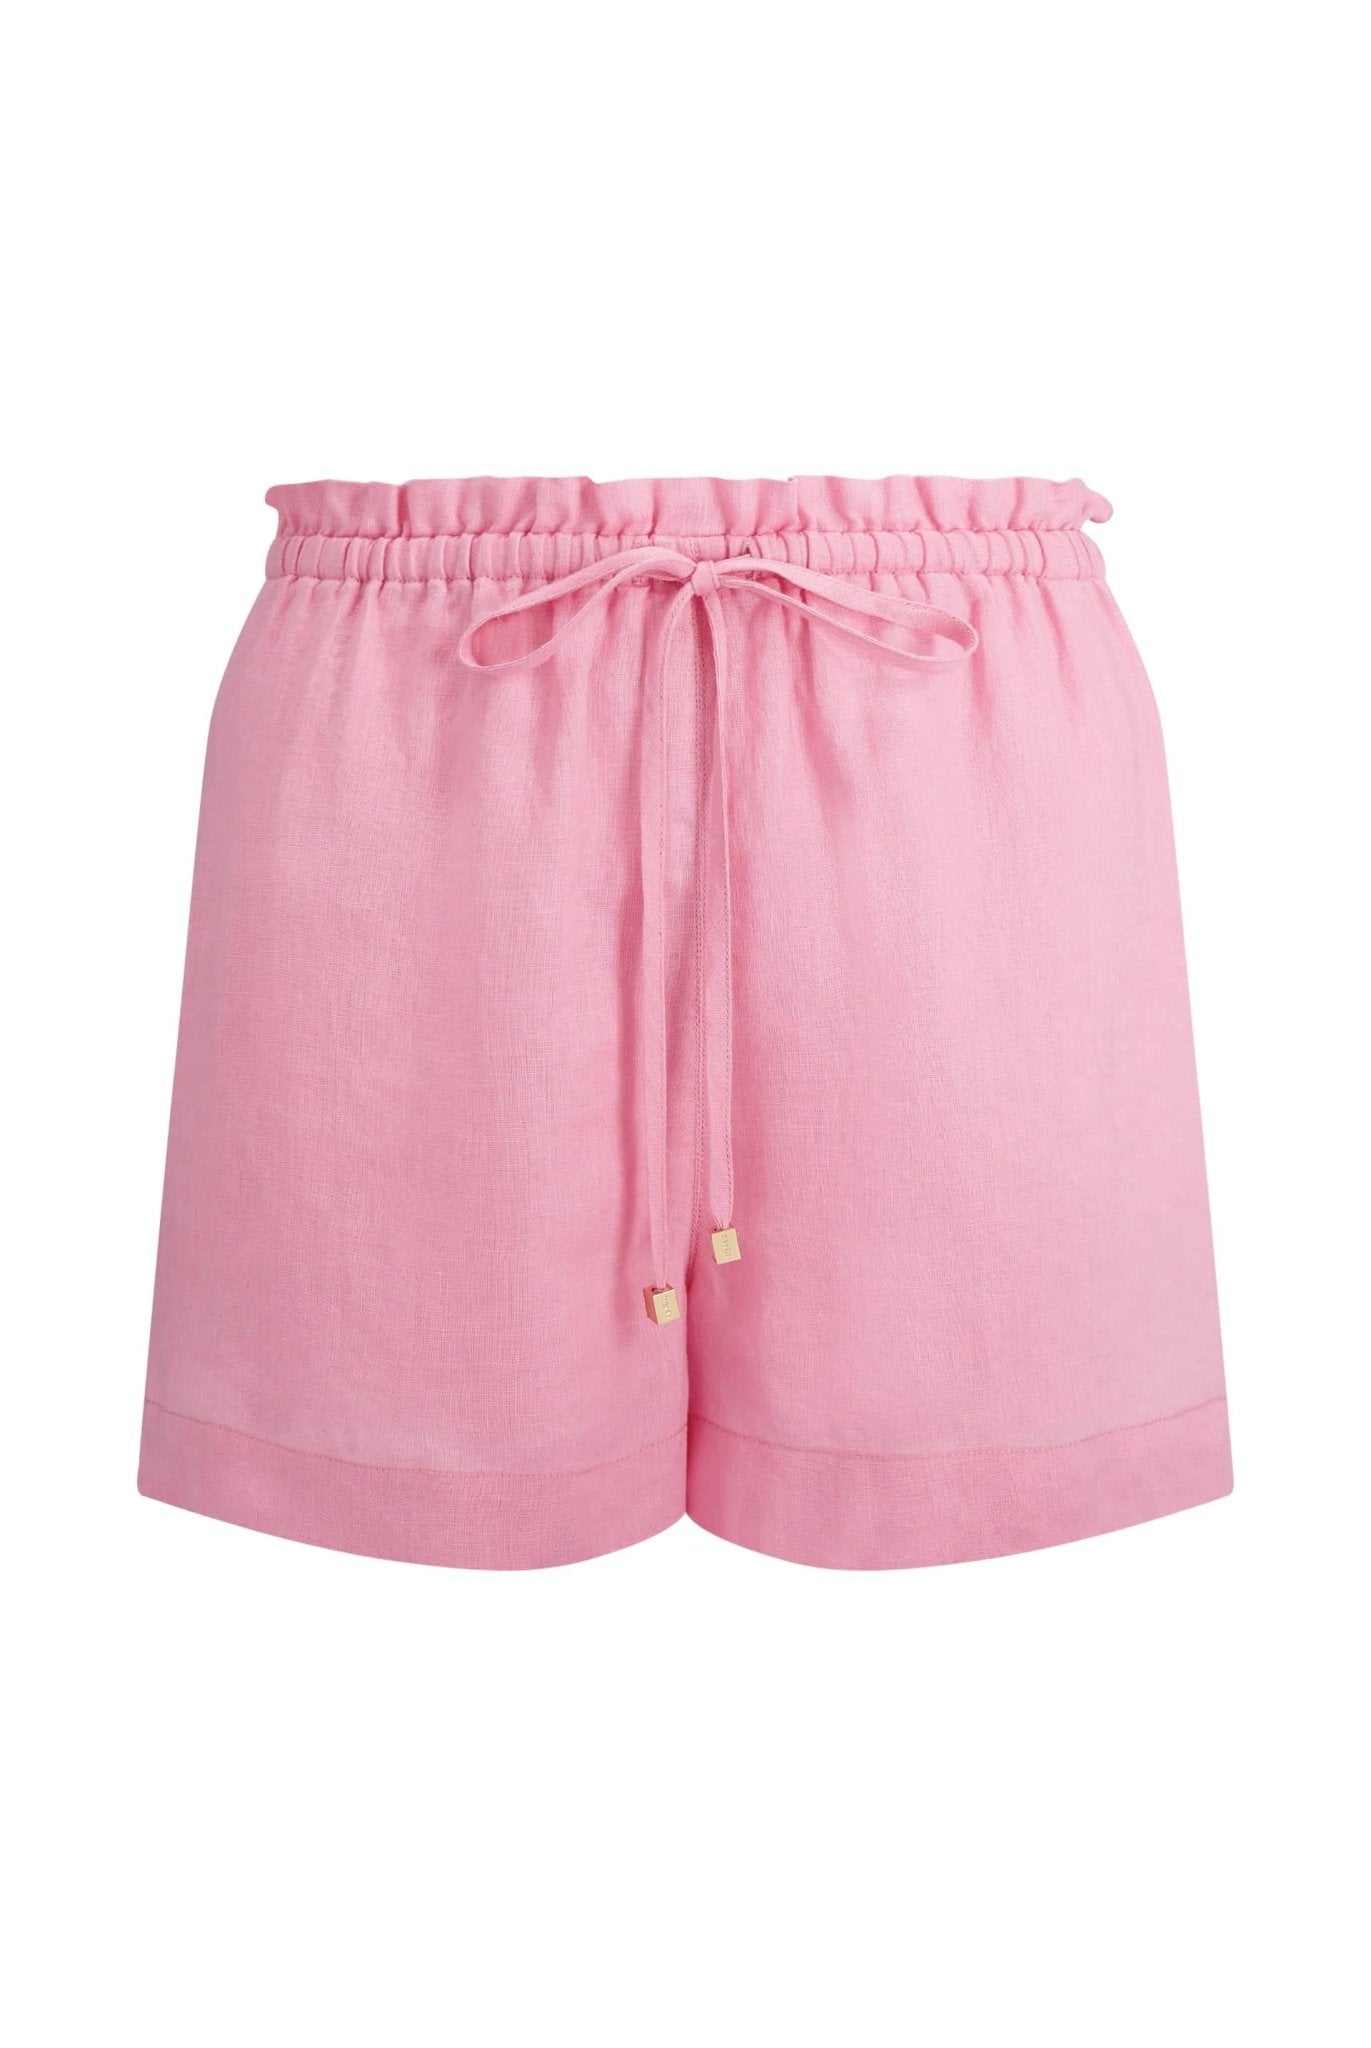 Marina Cay Linen Drawstring Shorts Pink - Heidi Klein - UK Store